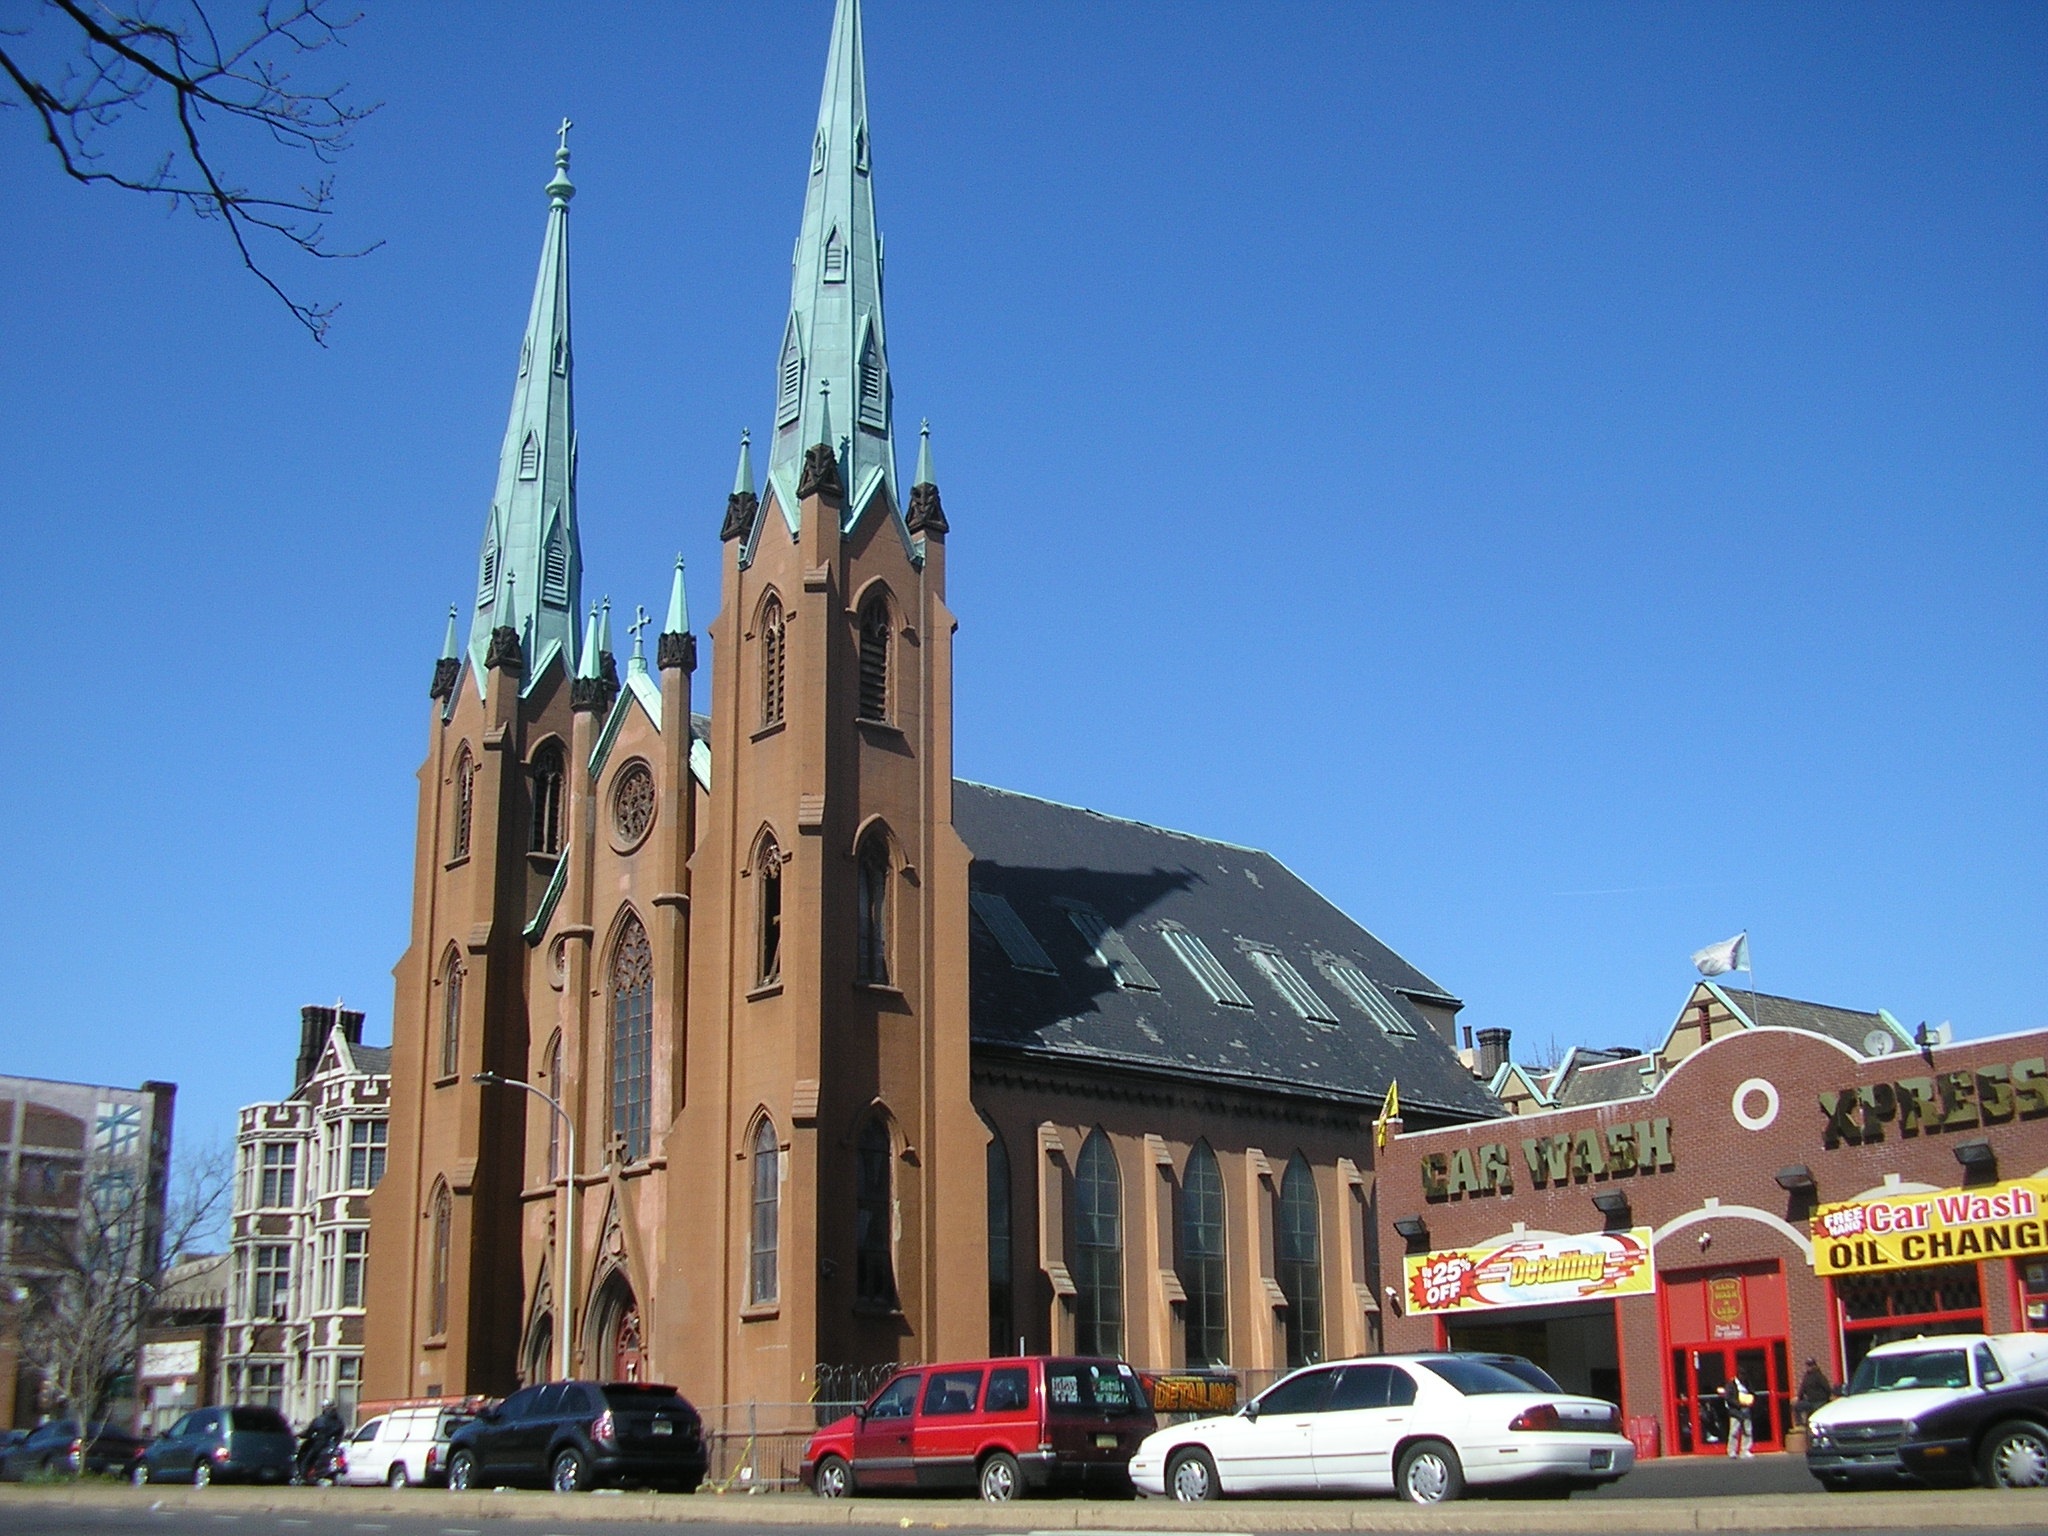 The Church of the Assumption, on the 1100 block of Spring Garden, is a neighborhood landmark.